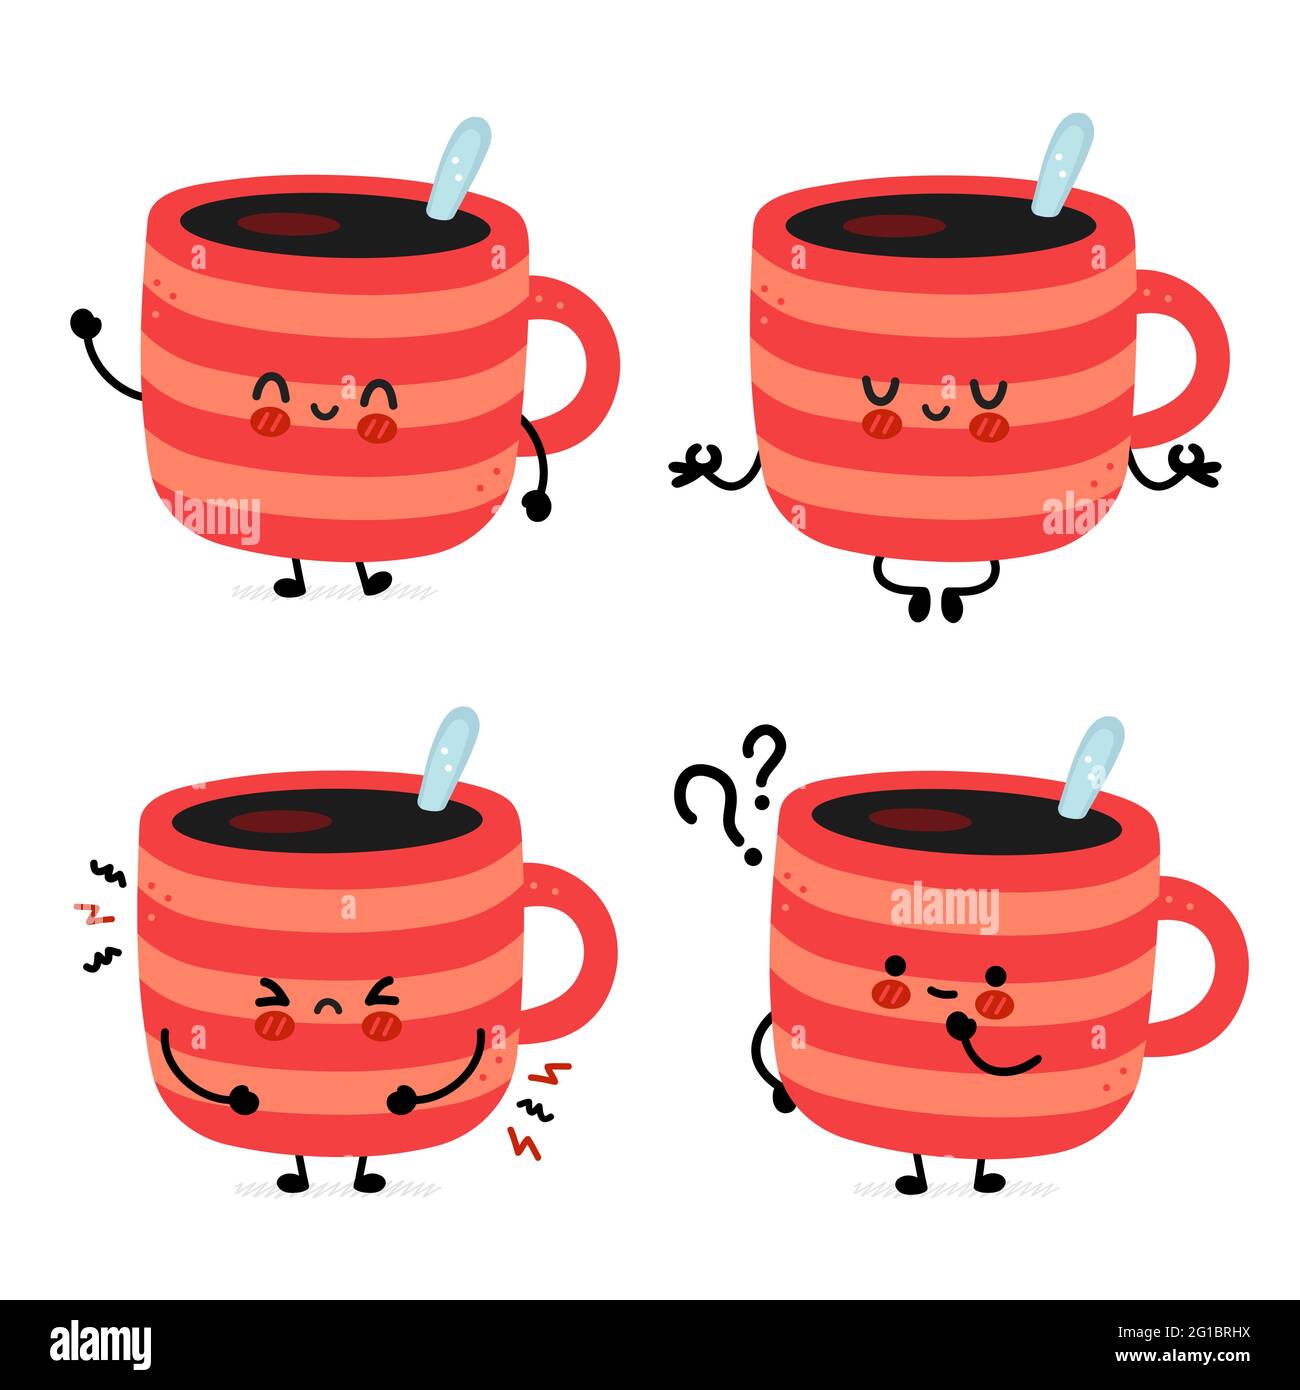 https://c8.alamy.com/comp/2G1BRHX/cute-funny-coffee-mug-set-collection-vector-hand-drawn-cartoon-kawaii-character-illustration-icon-isolated-on-white-background-coffee-or-tea-cup-mug-character-bundle-concept-2G1BRHX.jpg